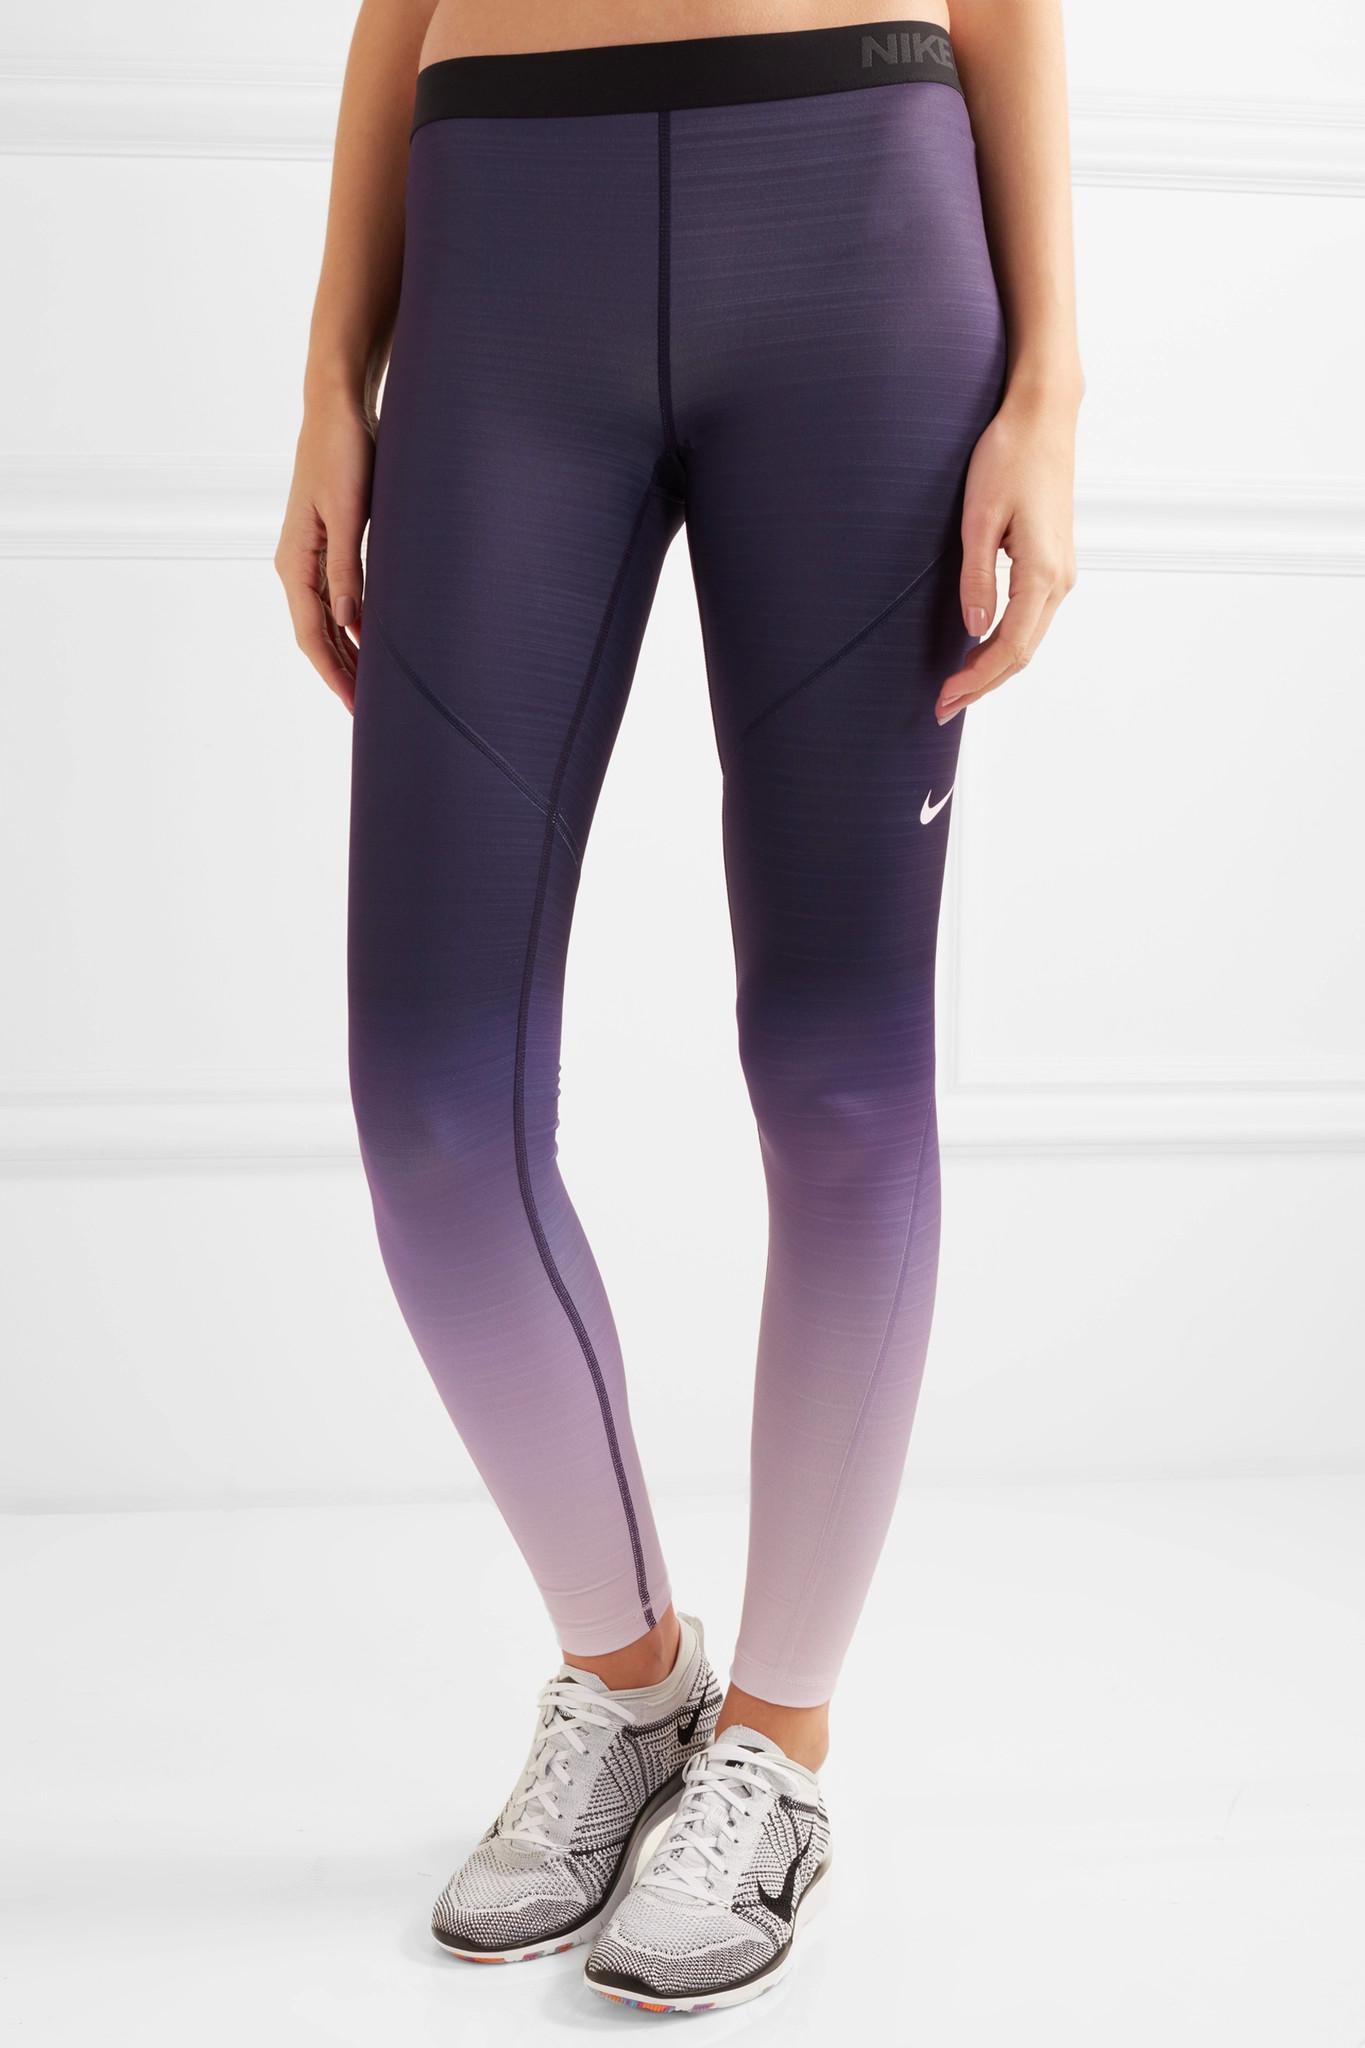 Nike Pro Hyperwarm Leggings Youth Girls Large Purple Peach Activewear Pants